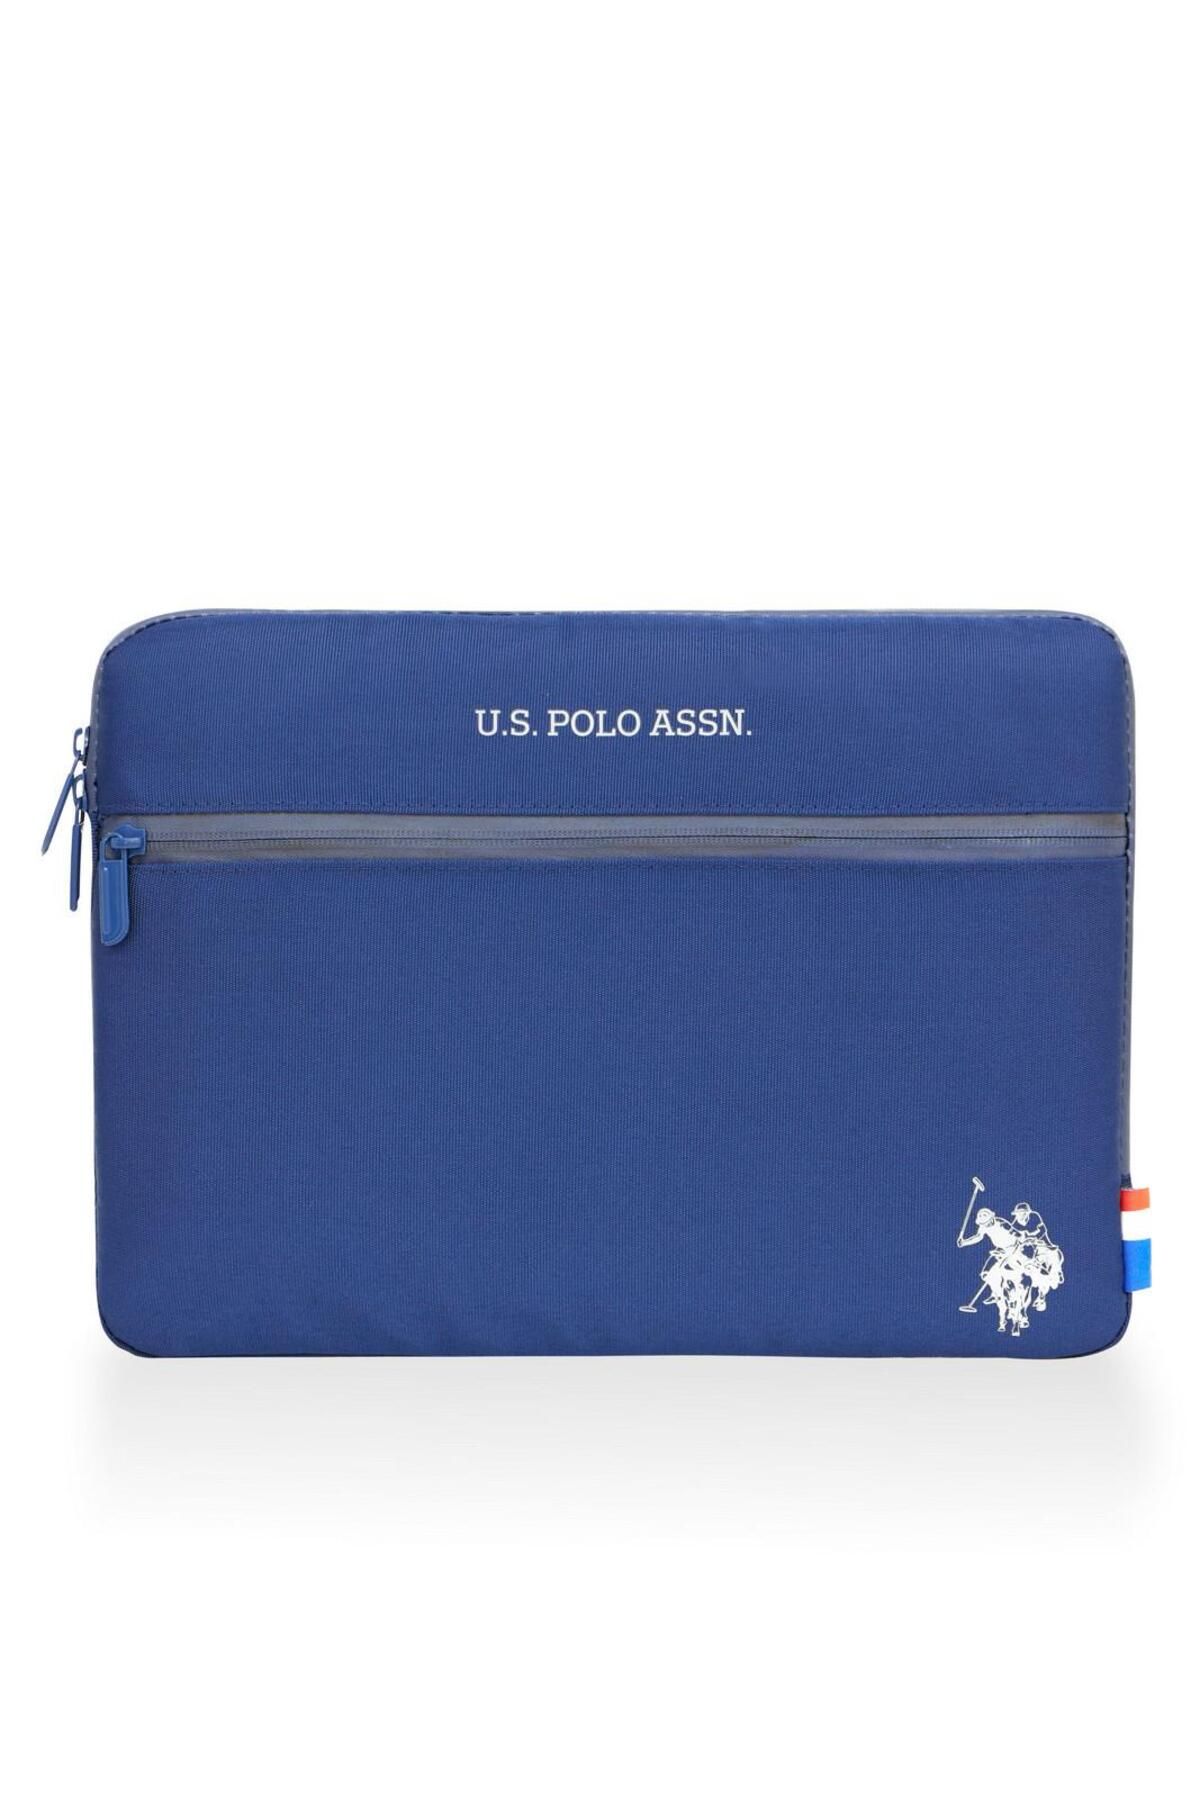 U.S. Polo Assn. U.S. POLO ASSN. PLEVR23689 Lacivert Unisex Laptop Çantası